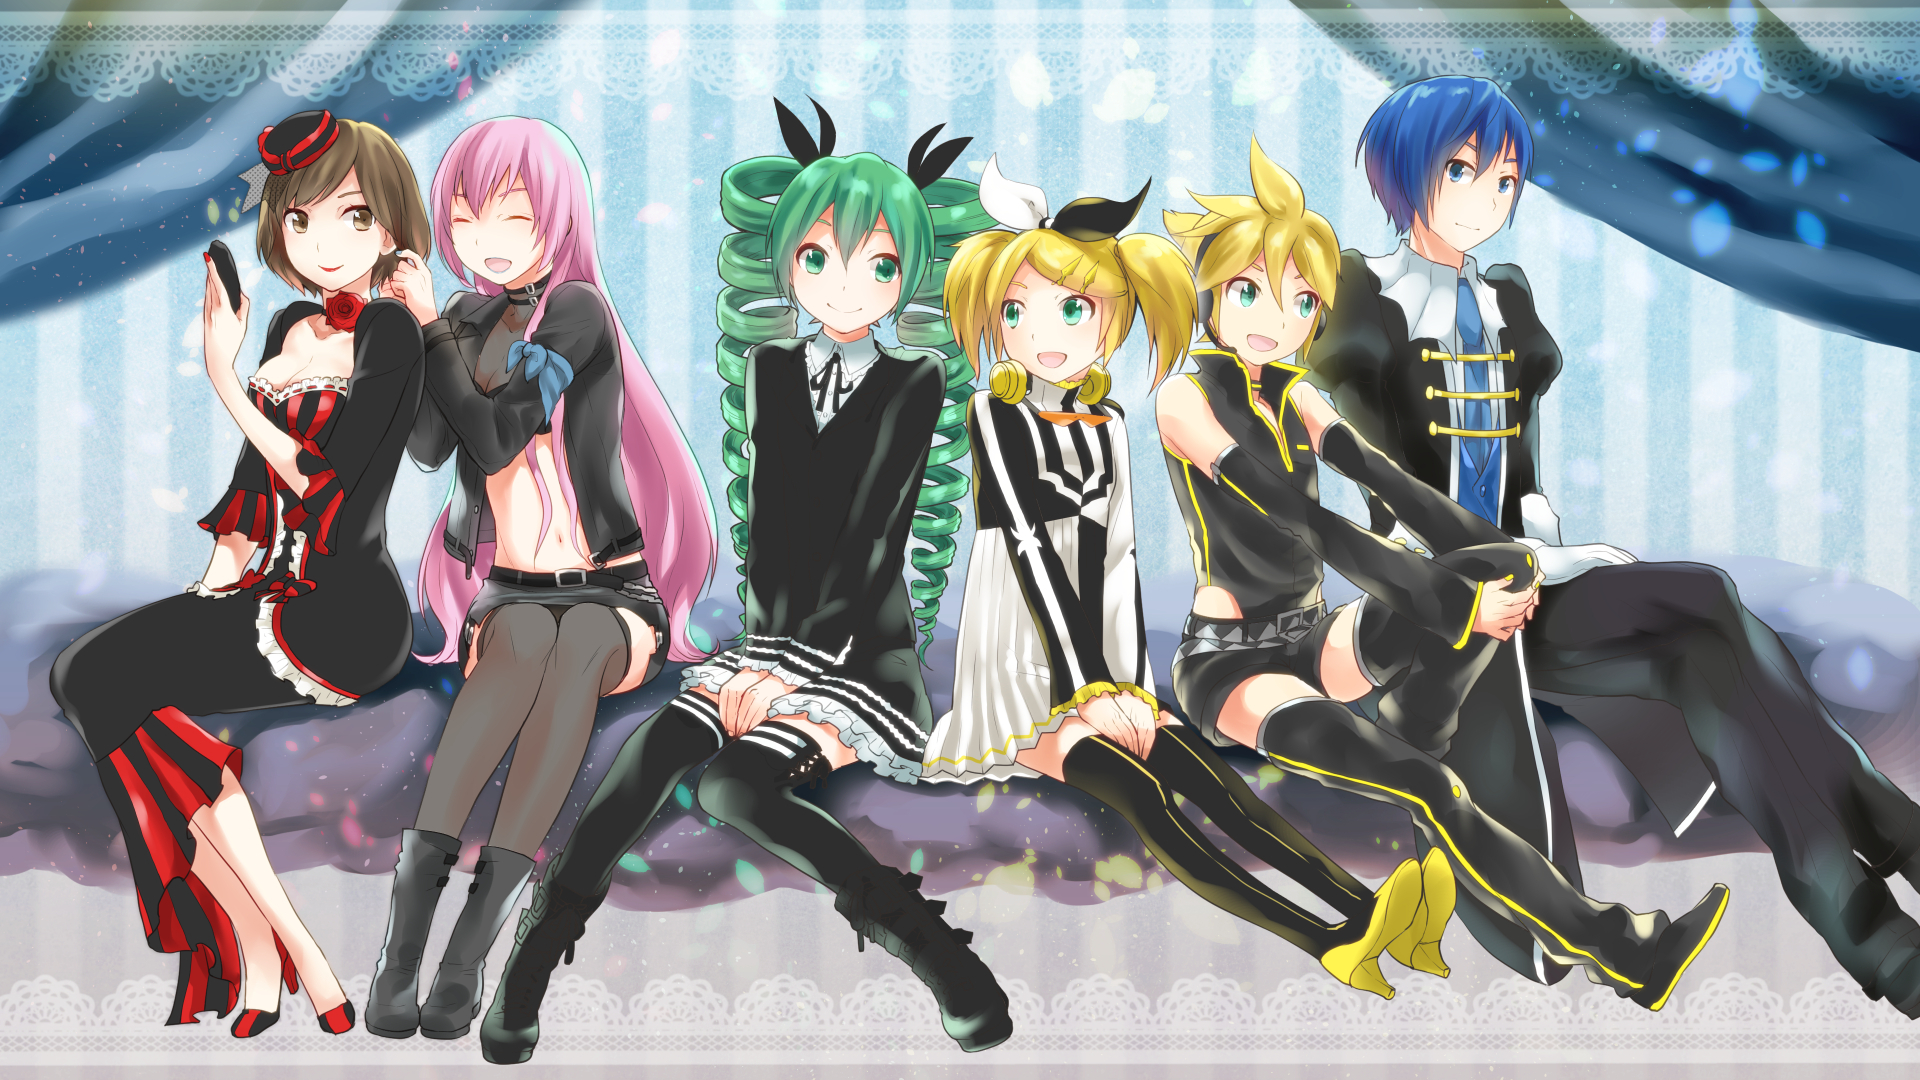 Descarga gratis la imagen Vocaloid, Luka Megurine, Animado, Hatsune Miku, Rin Kagamine, Kaito (Vocaloid), Len Kagamine, Meiko (Vocaloid), Proyecto Diva en el escritorio de tu PC